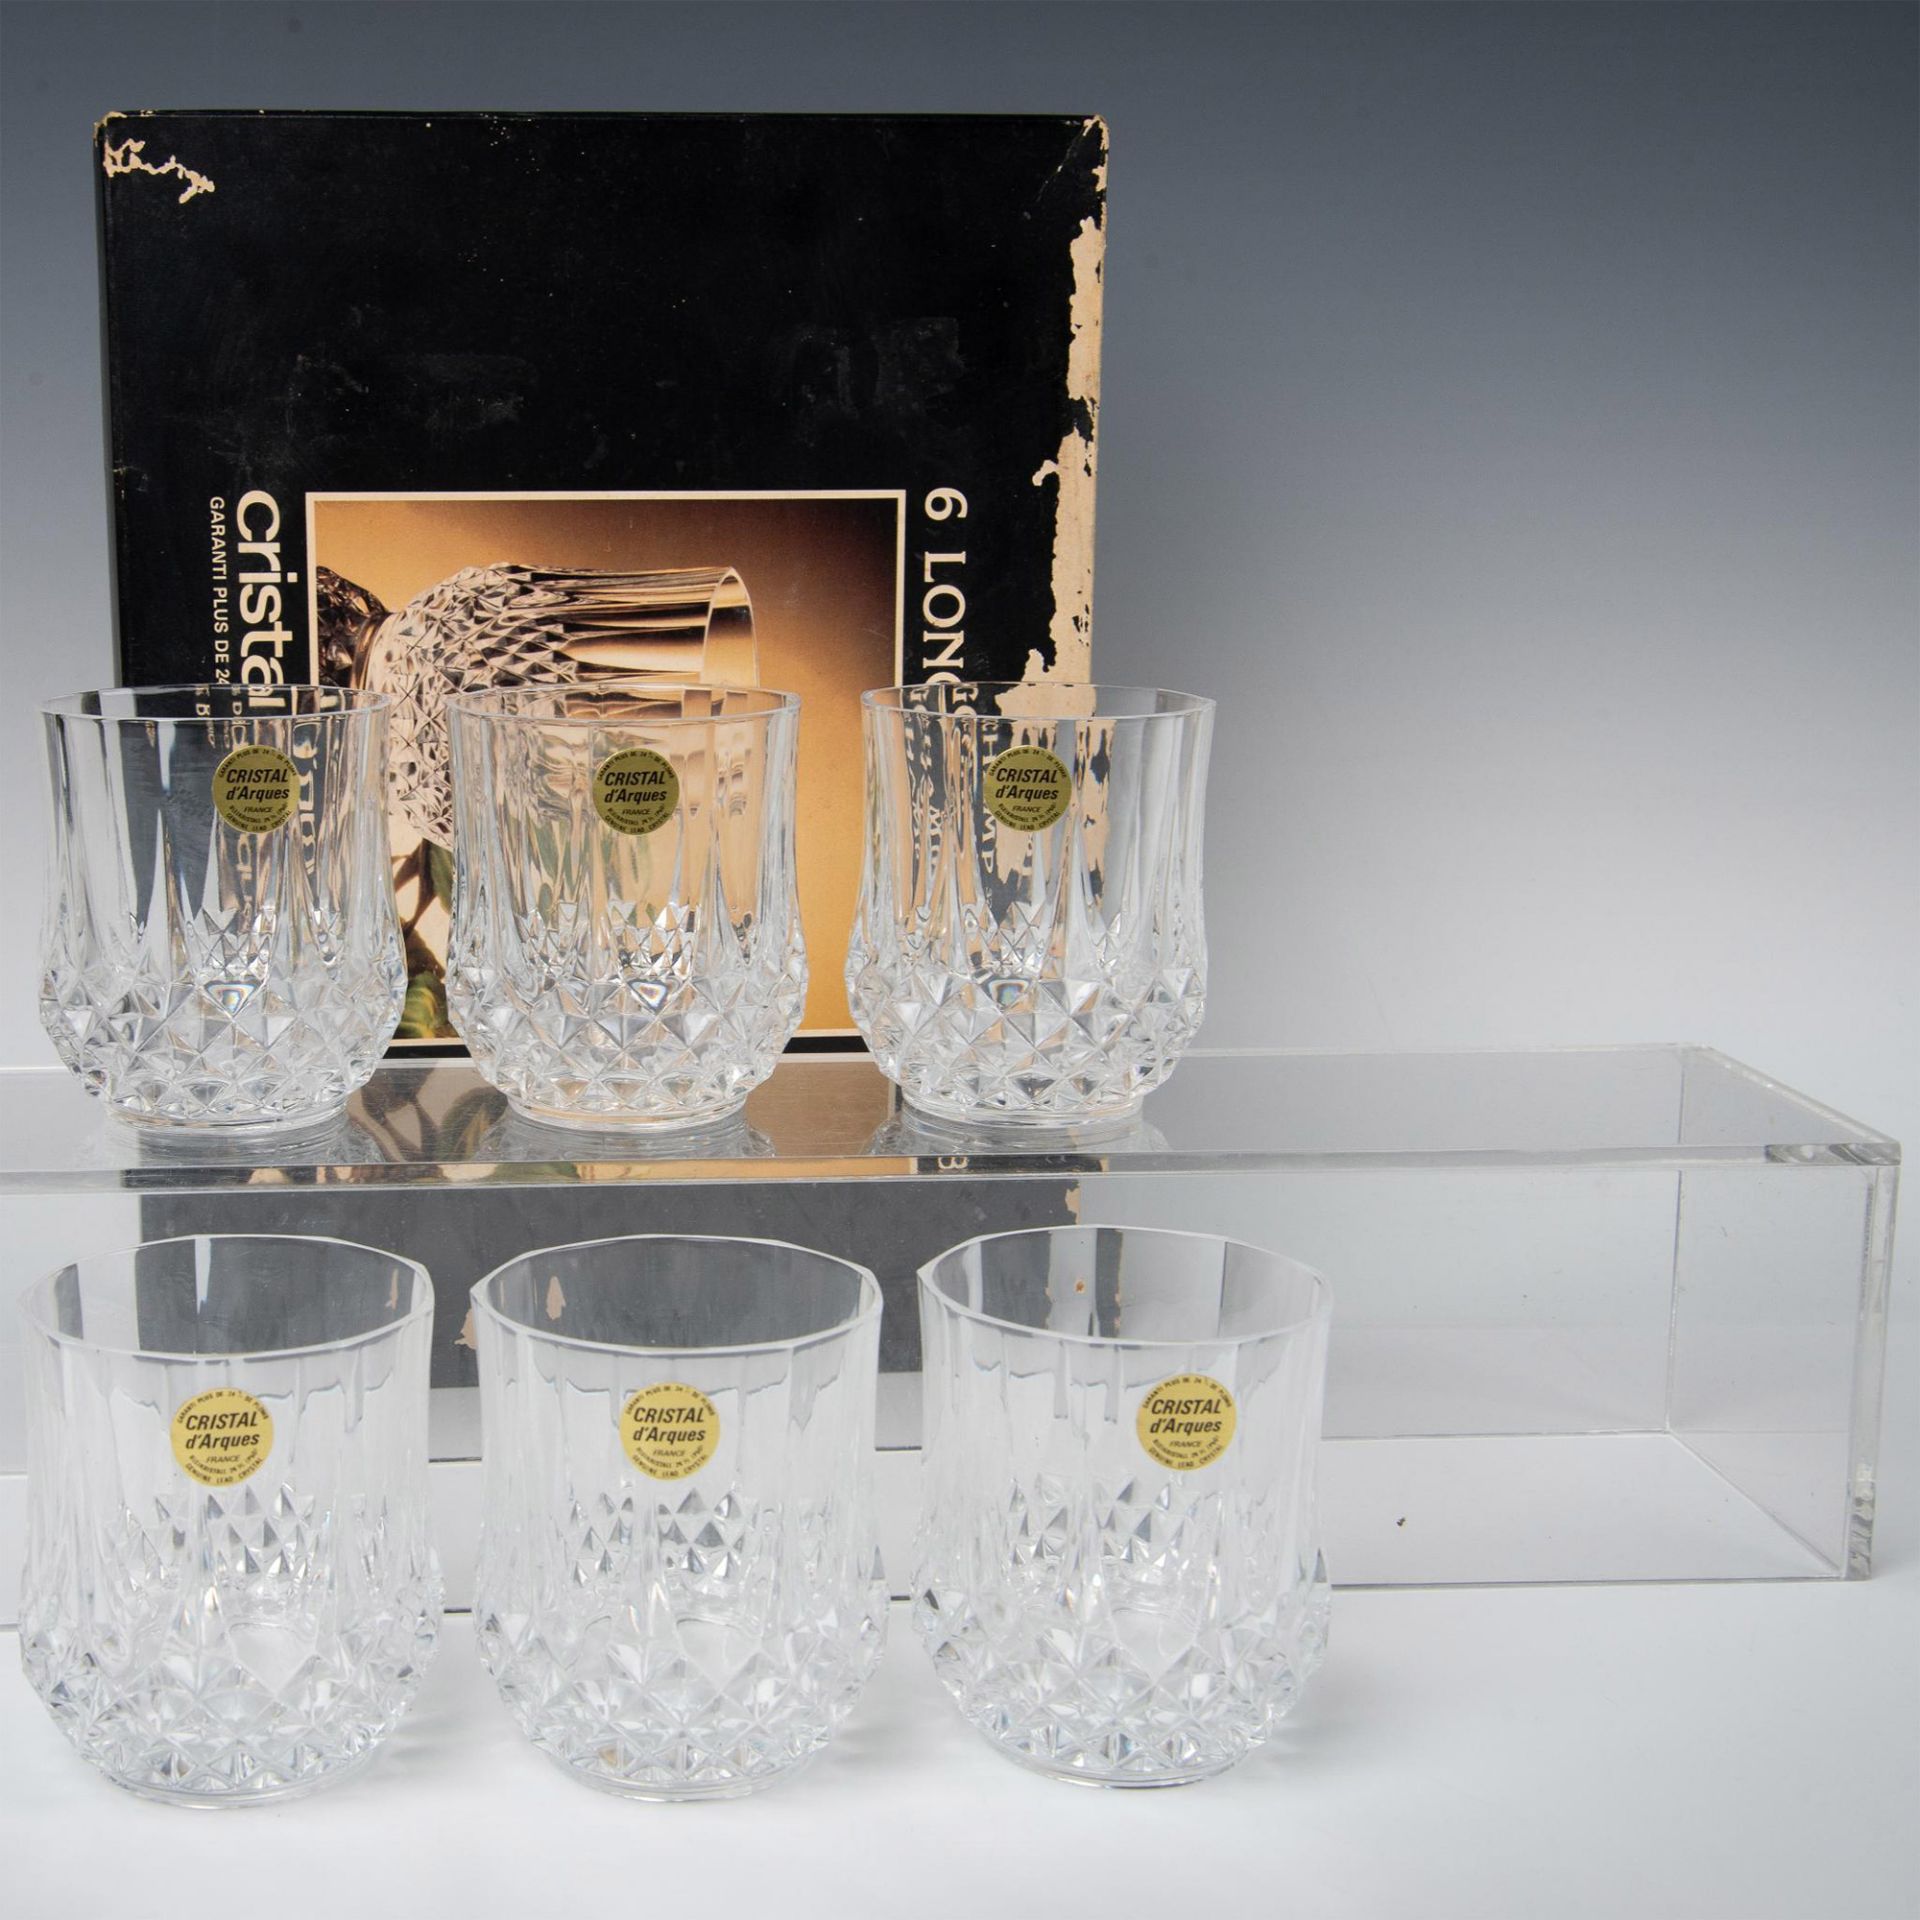 6pc Longchamp Crystal Rocks Glasses - Image 2 of 4